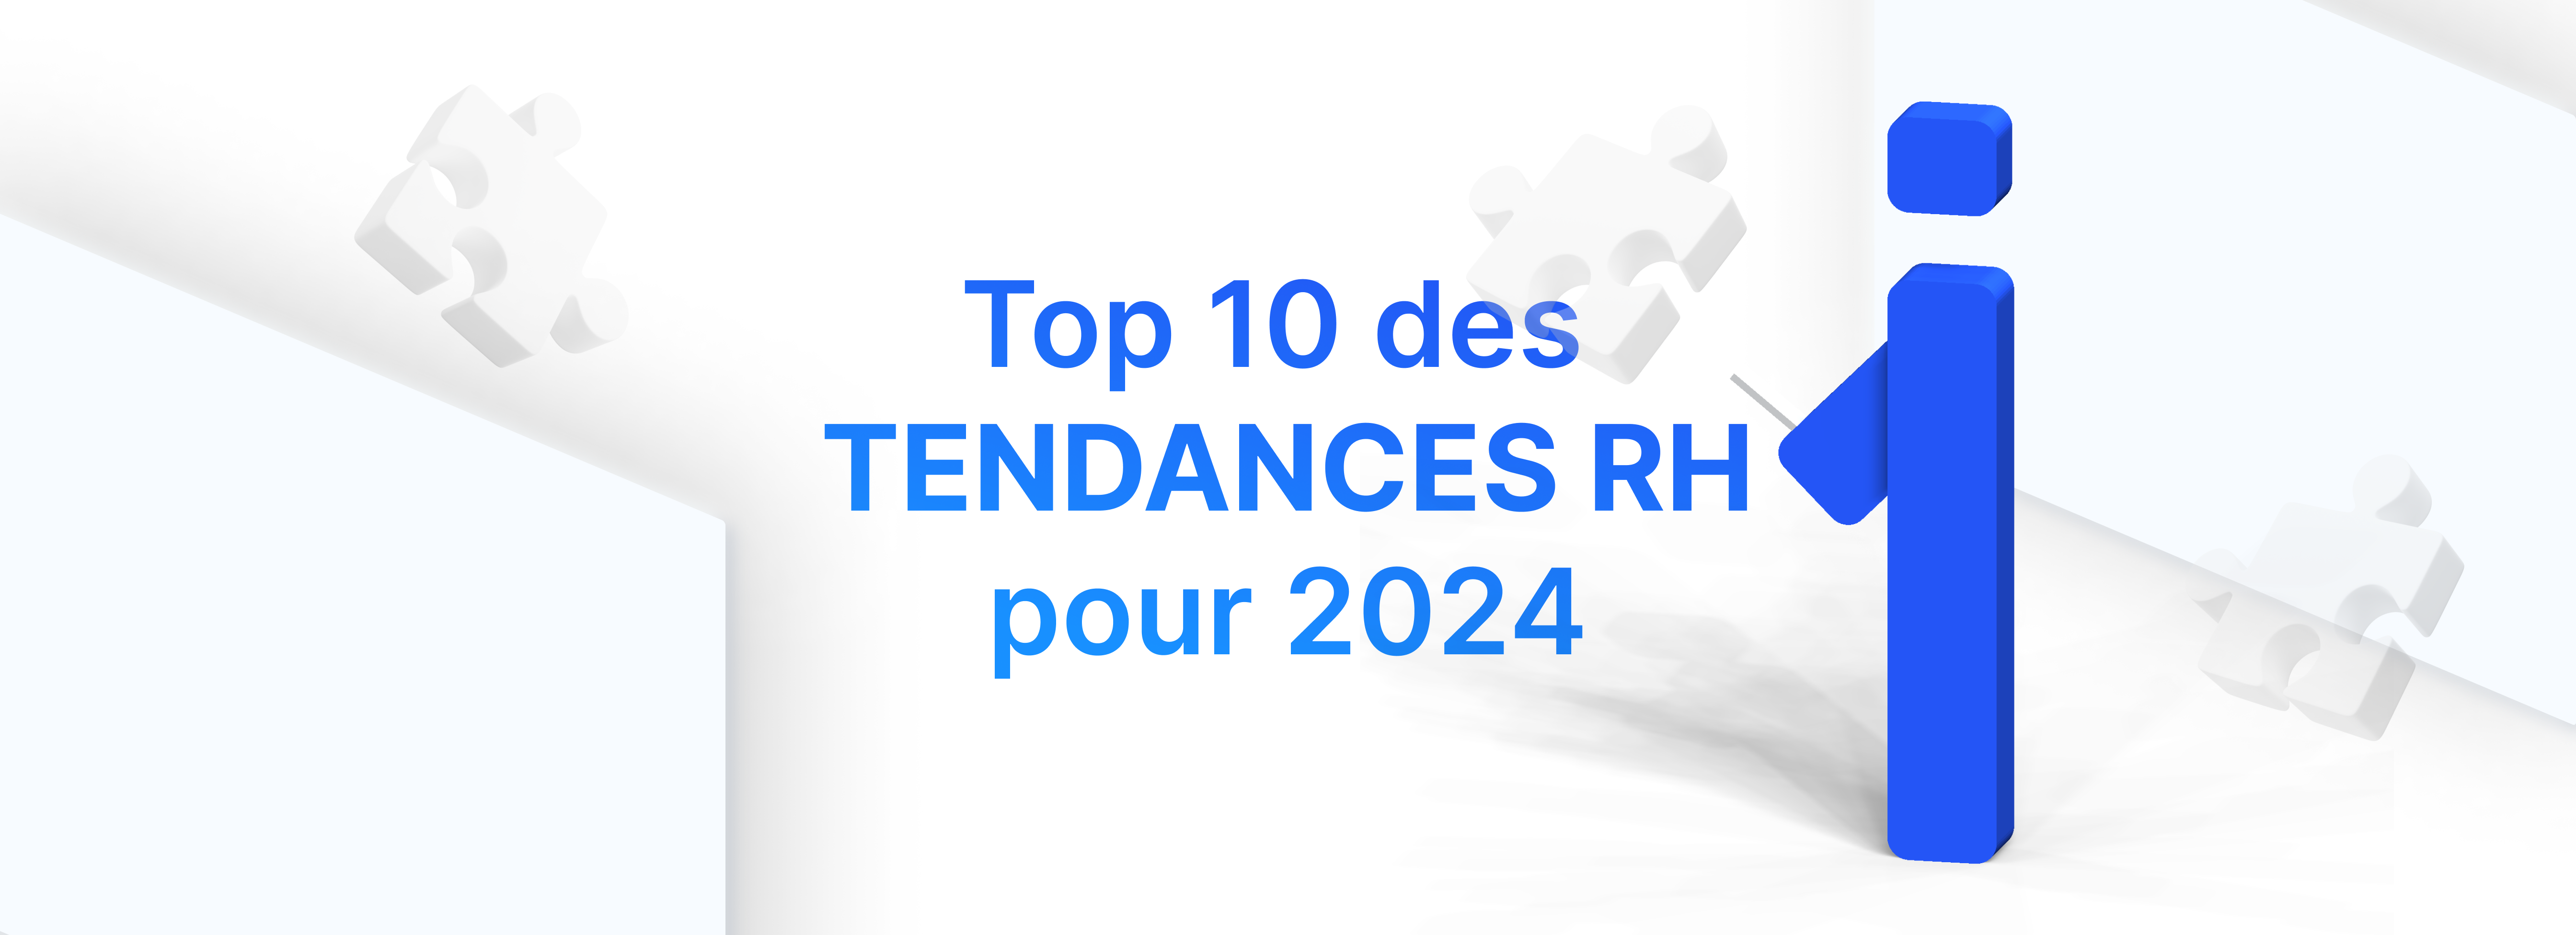 Top-10-RH-Tendances-2024-Head-Banner